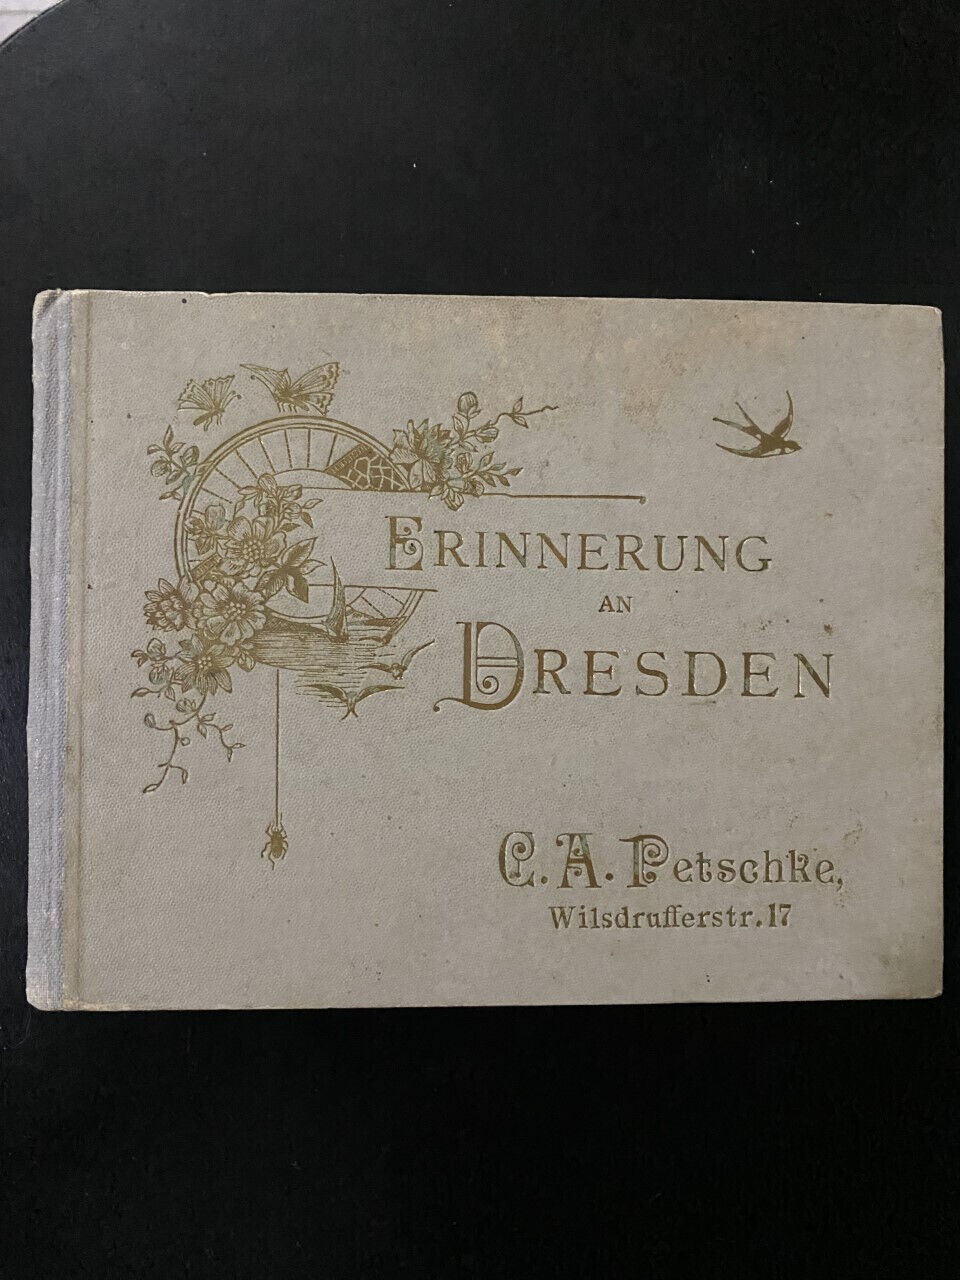 Rare Souvenir Book of the City of Dresden. 1896. Erinnerung an Dresden